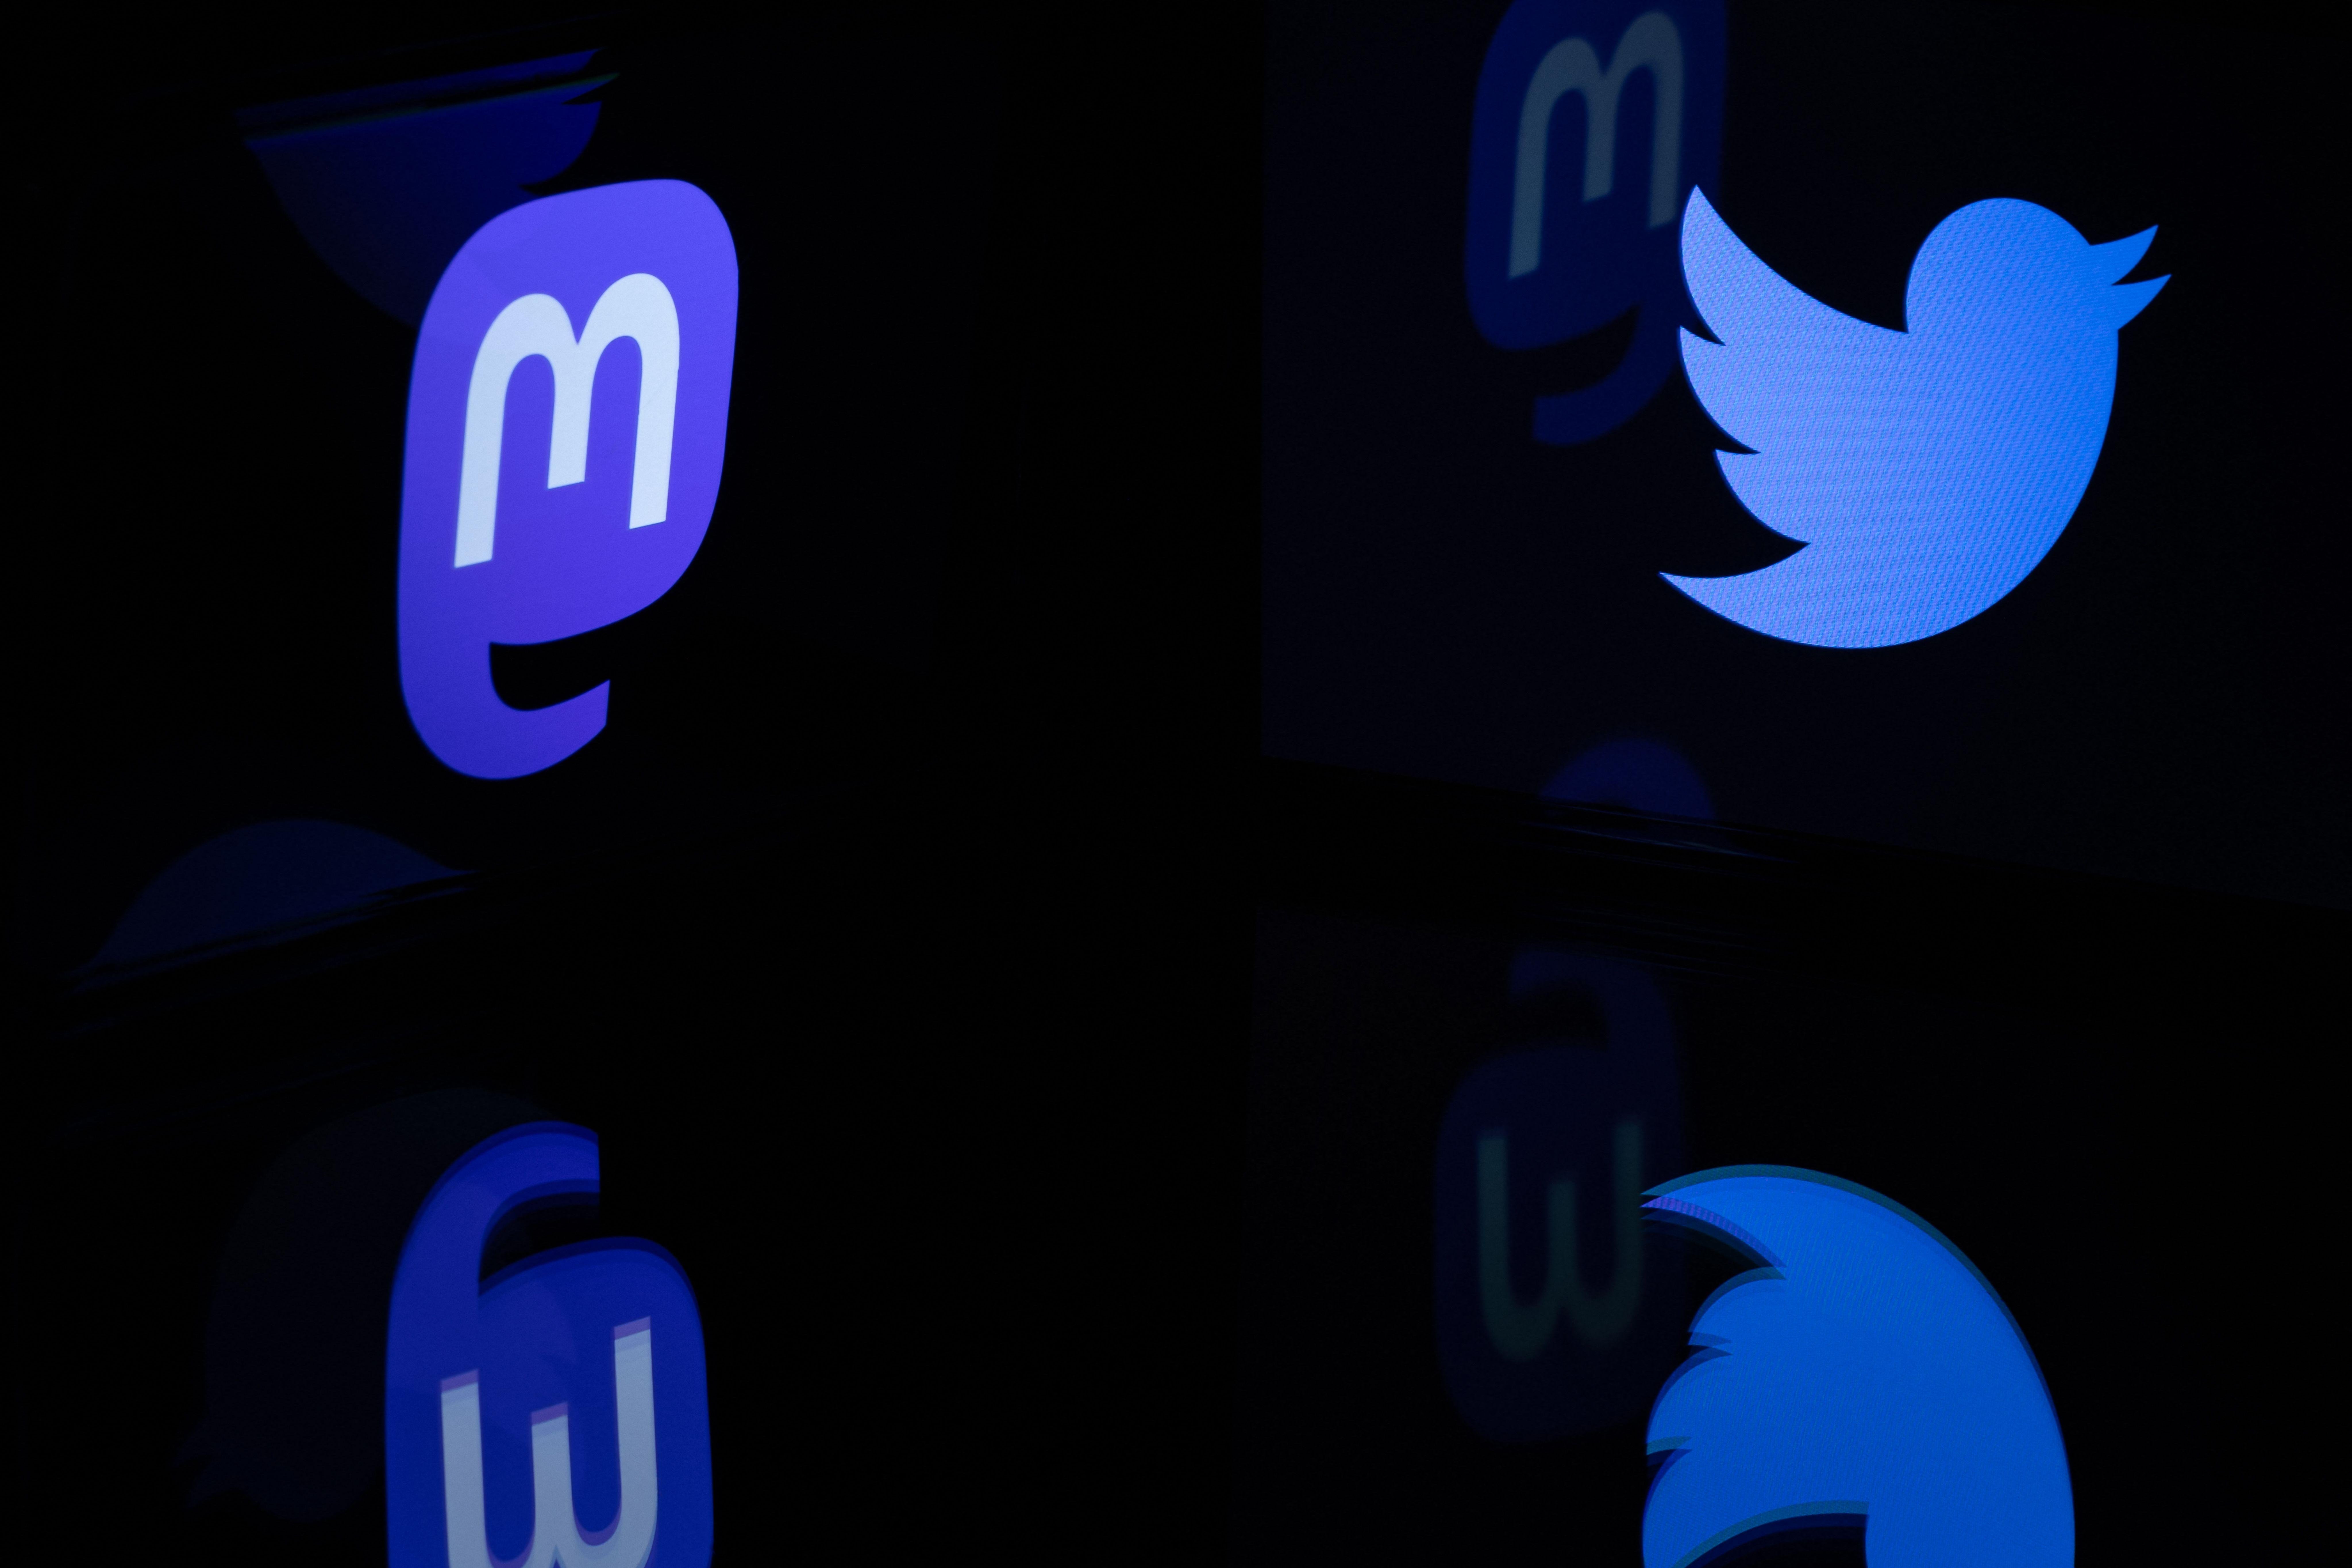 The Mastodon and Twitter logos